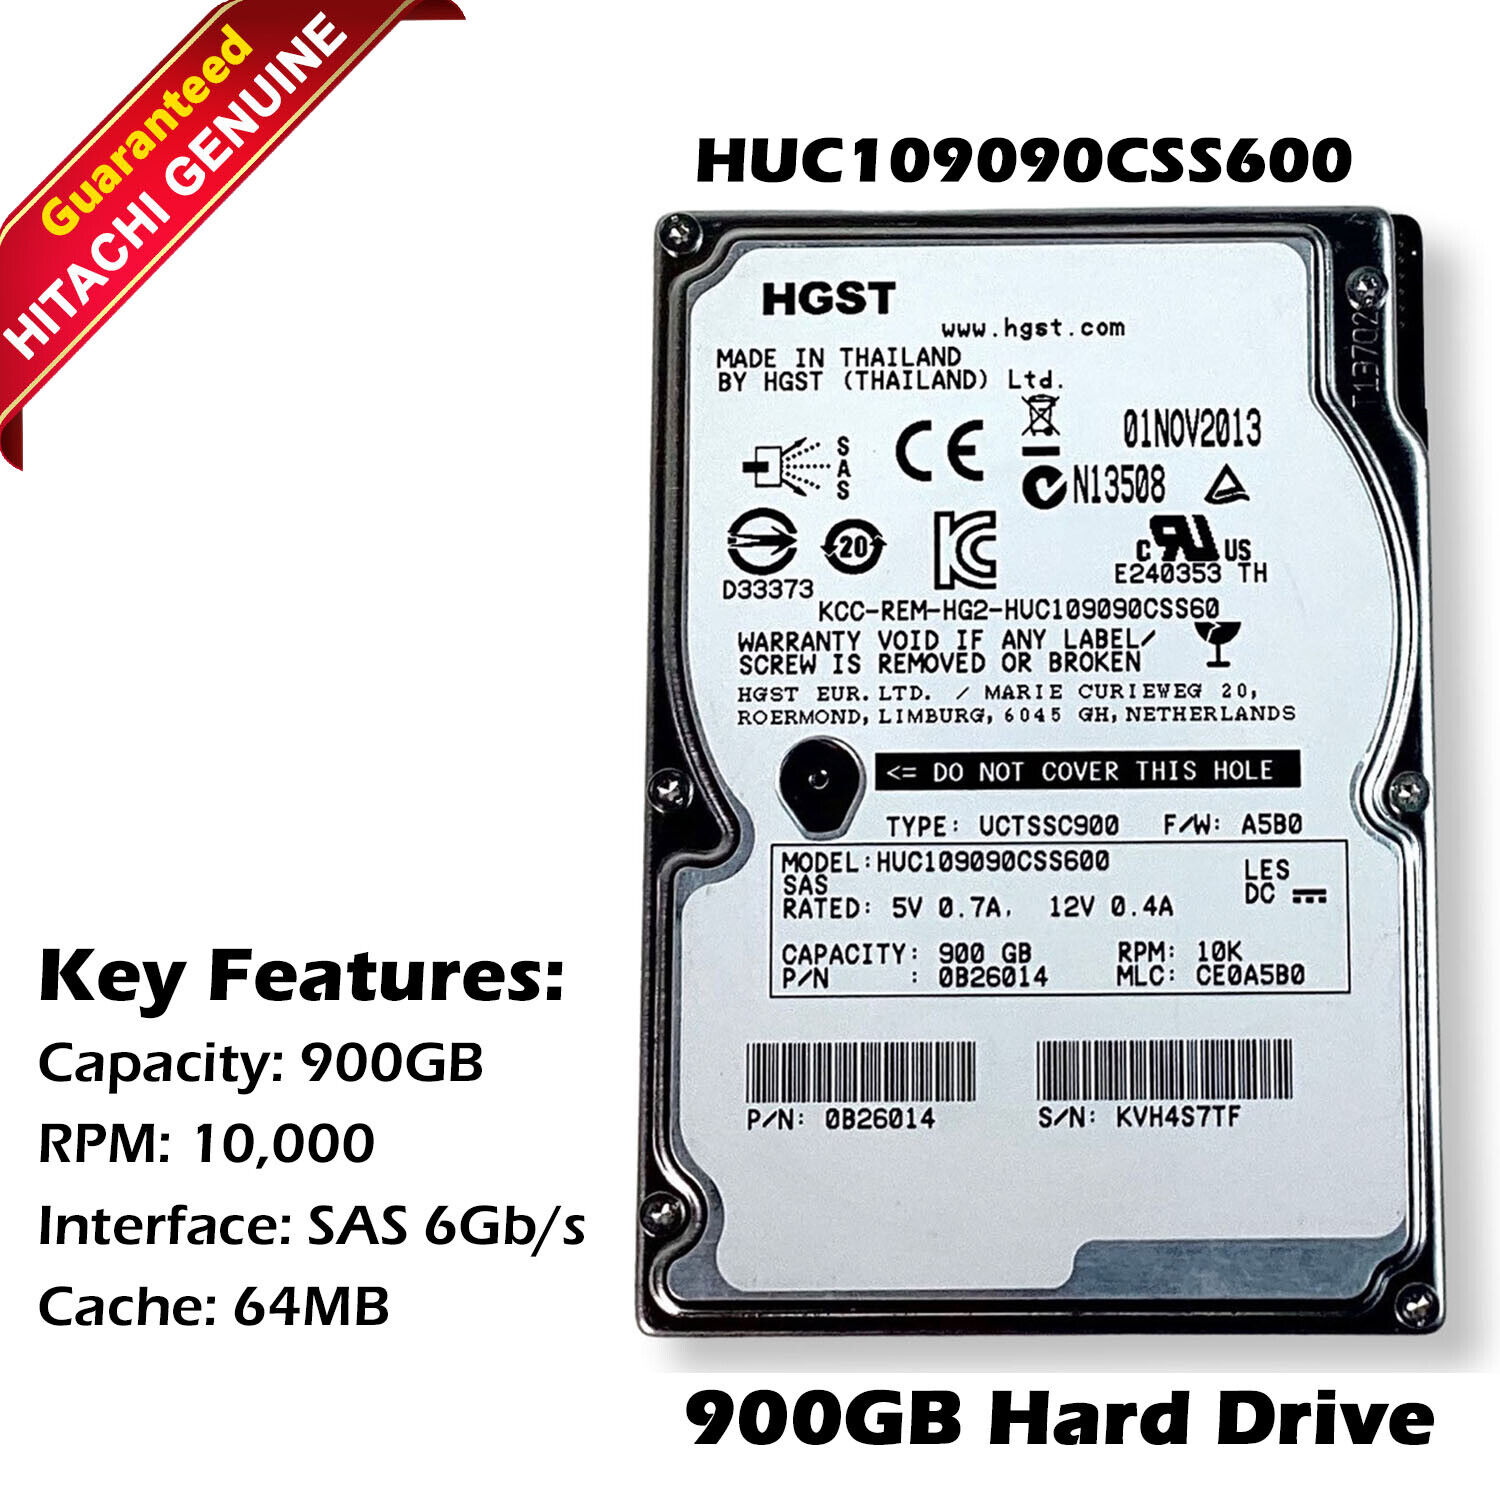 Genuine Hitachi HUC109090CSS600 900GB Internal HDD 10000RPM 2.5